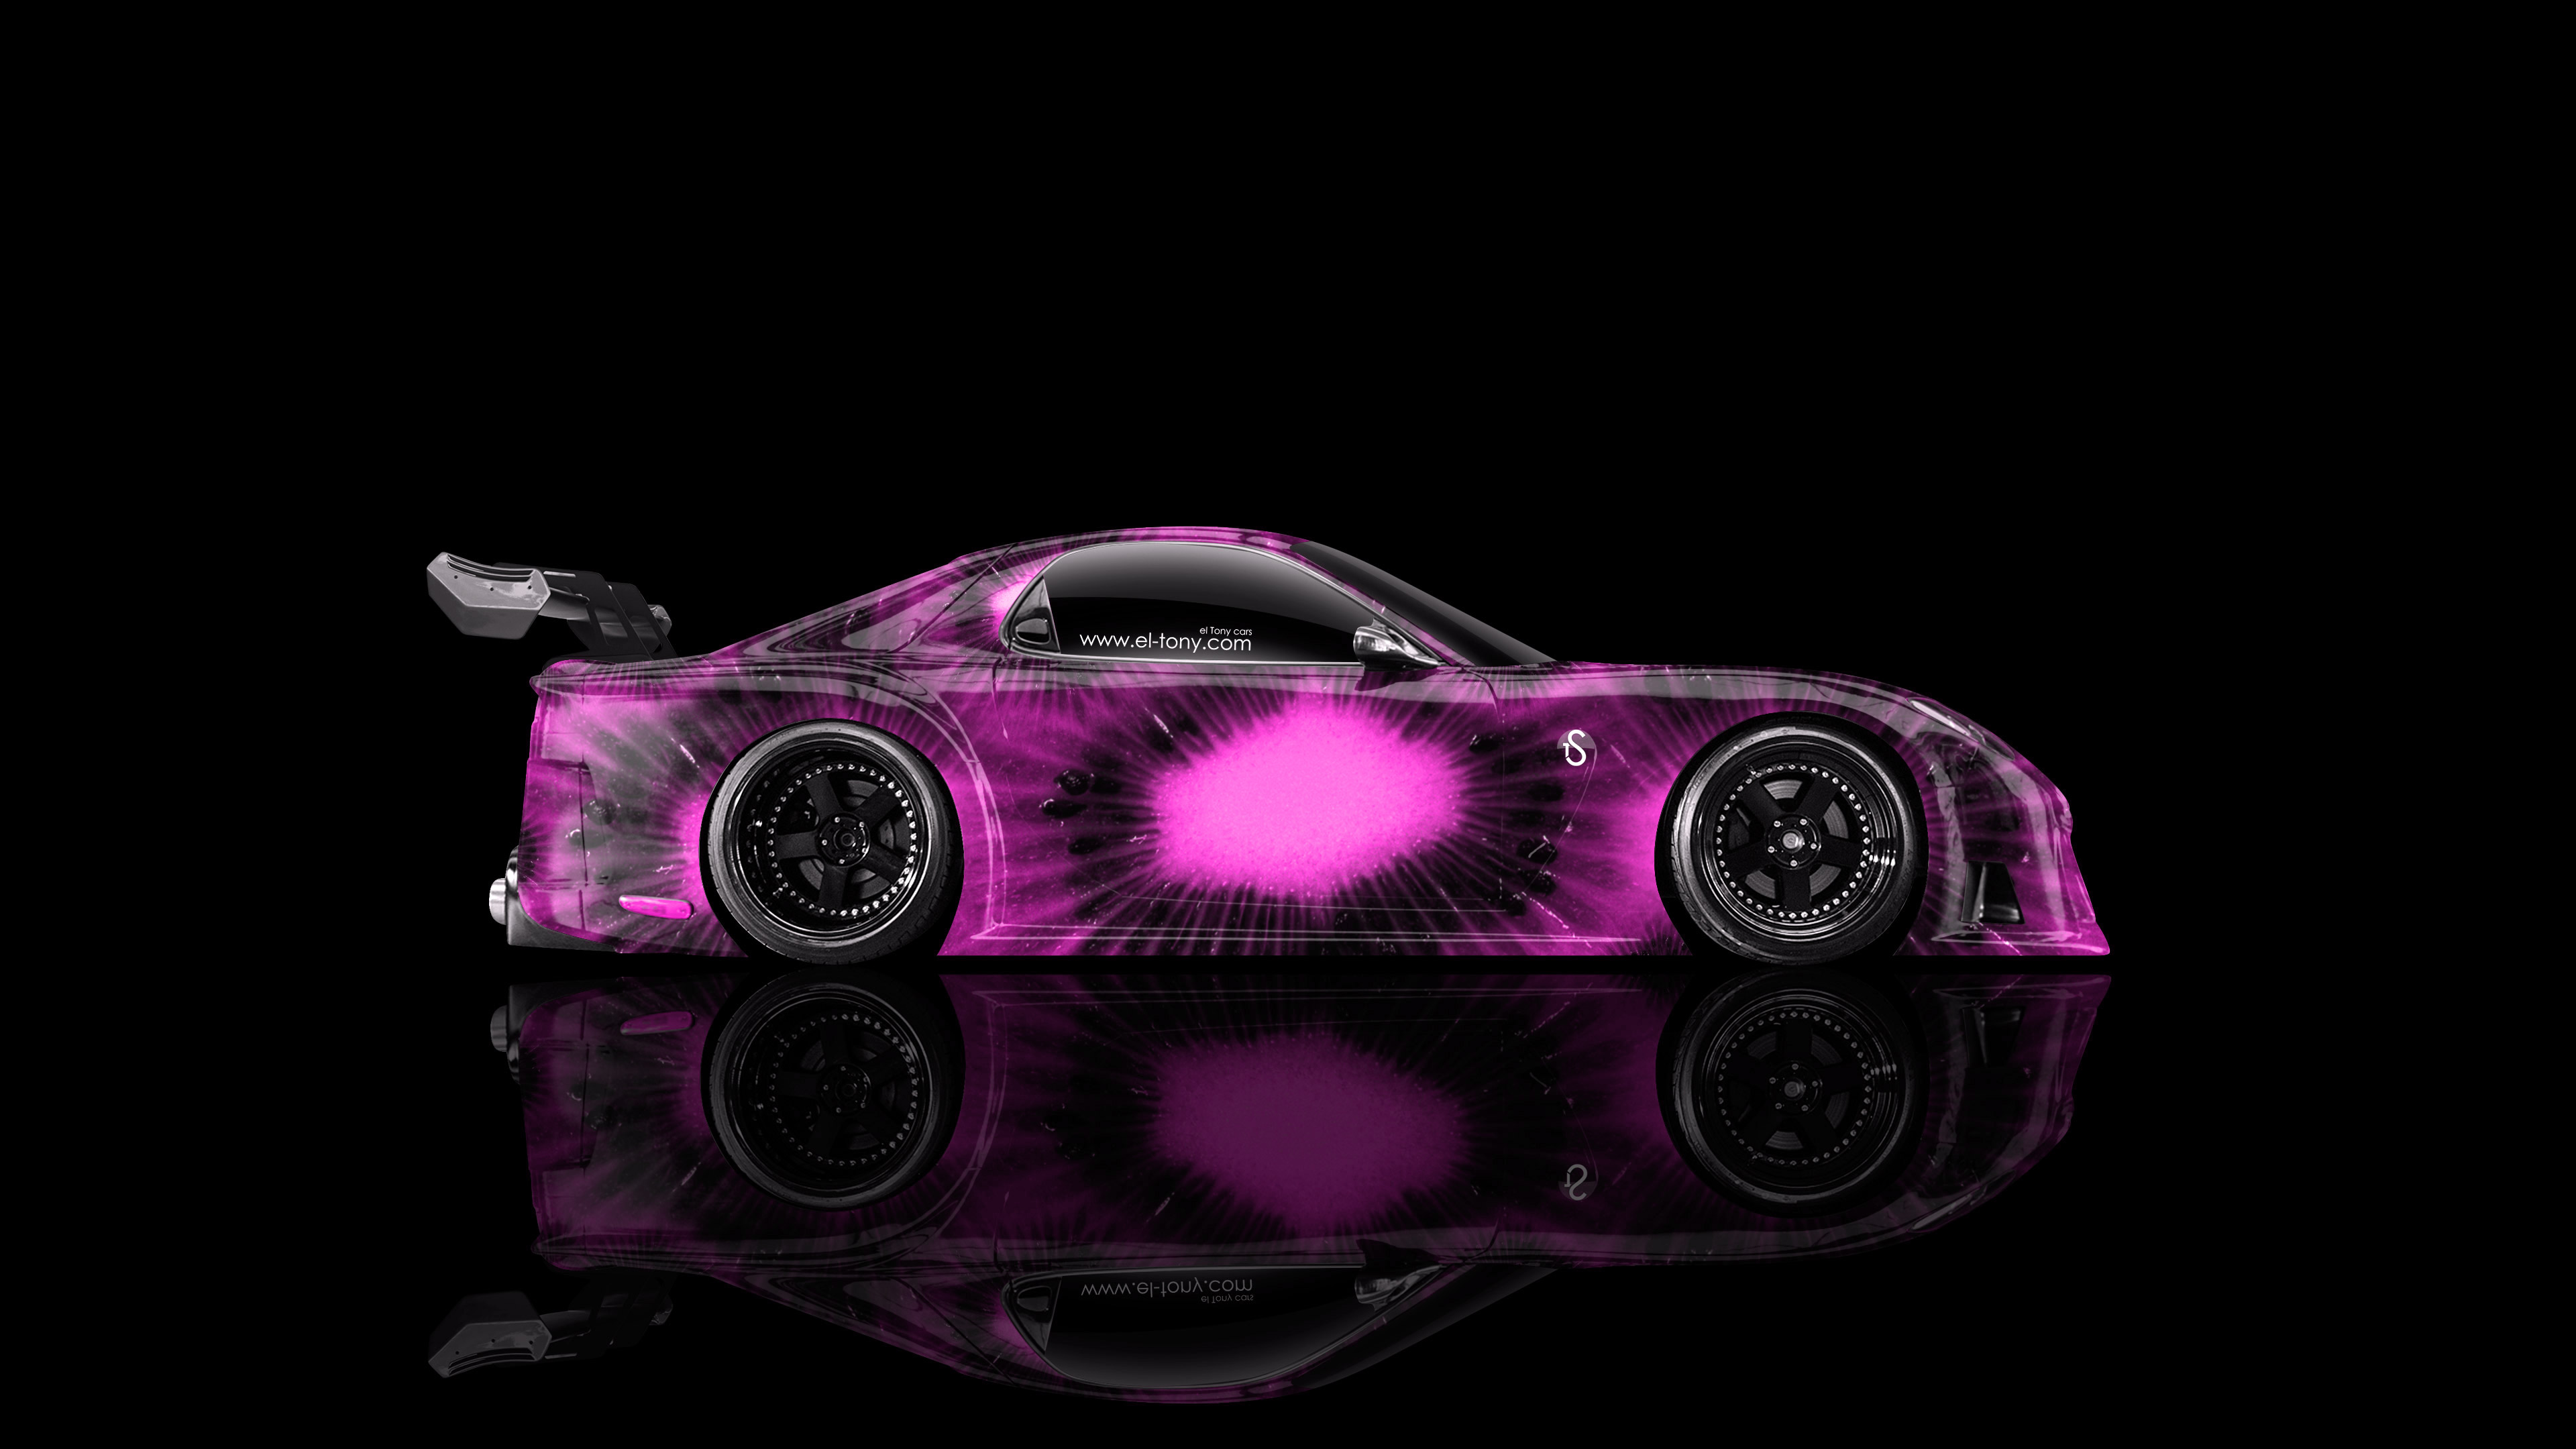  VeilSide JDM Side Kiwi Aerography Car 2014 Pink Colors 4K Wallpapers